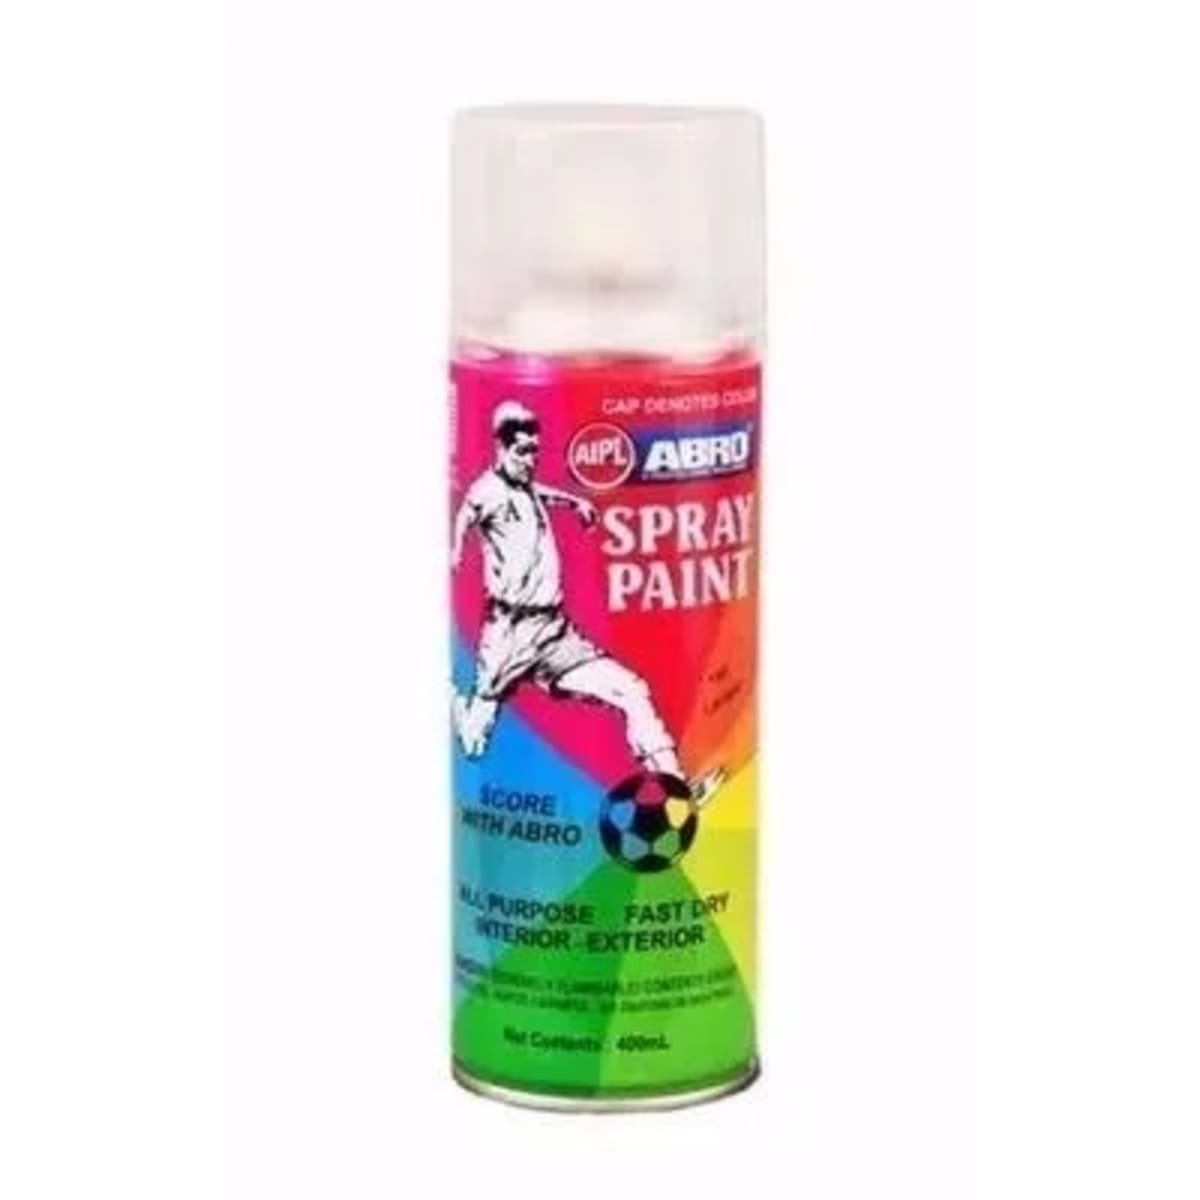 Spray Paints, Buy Online